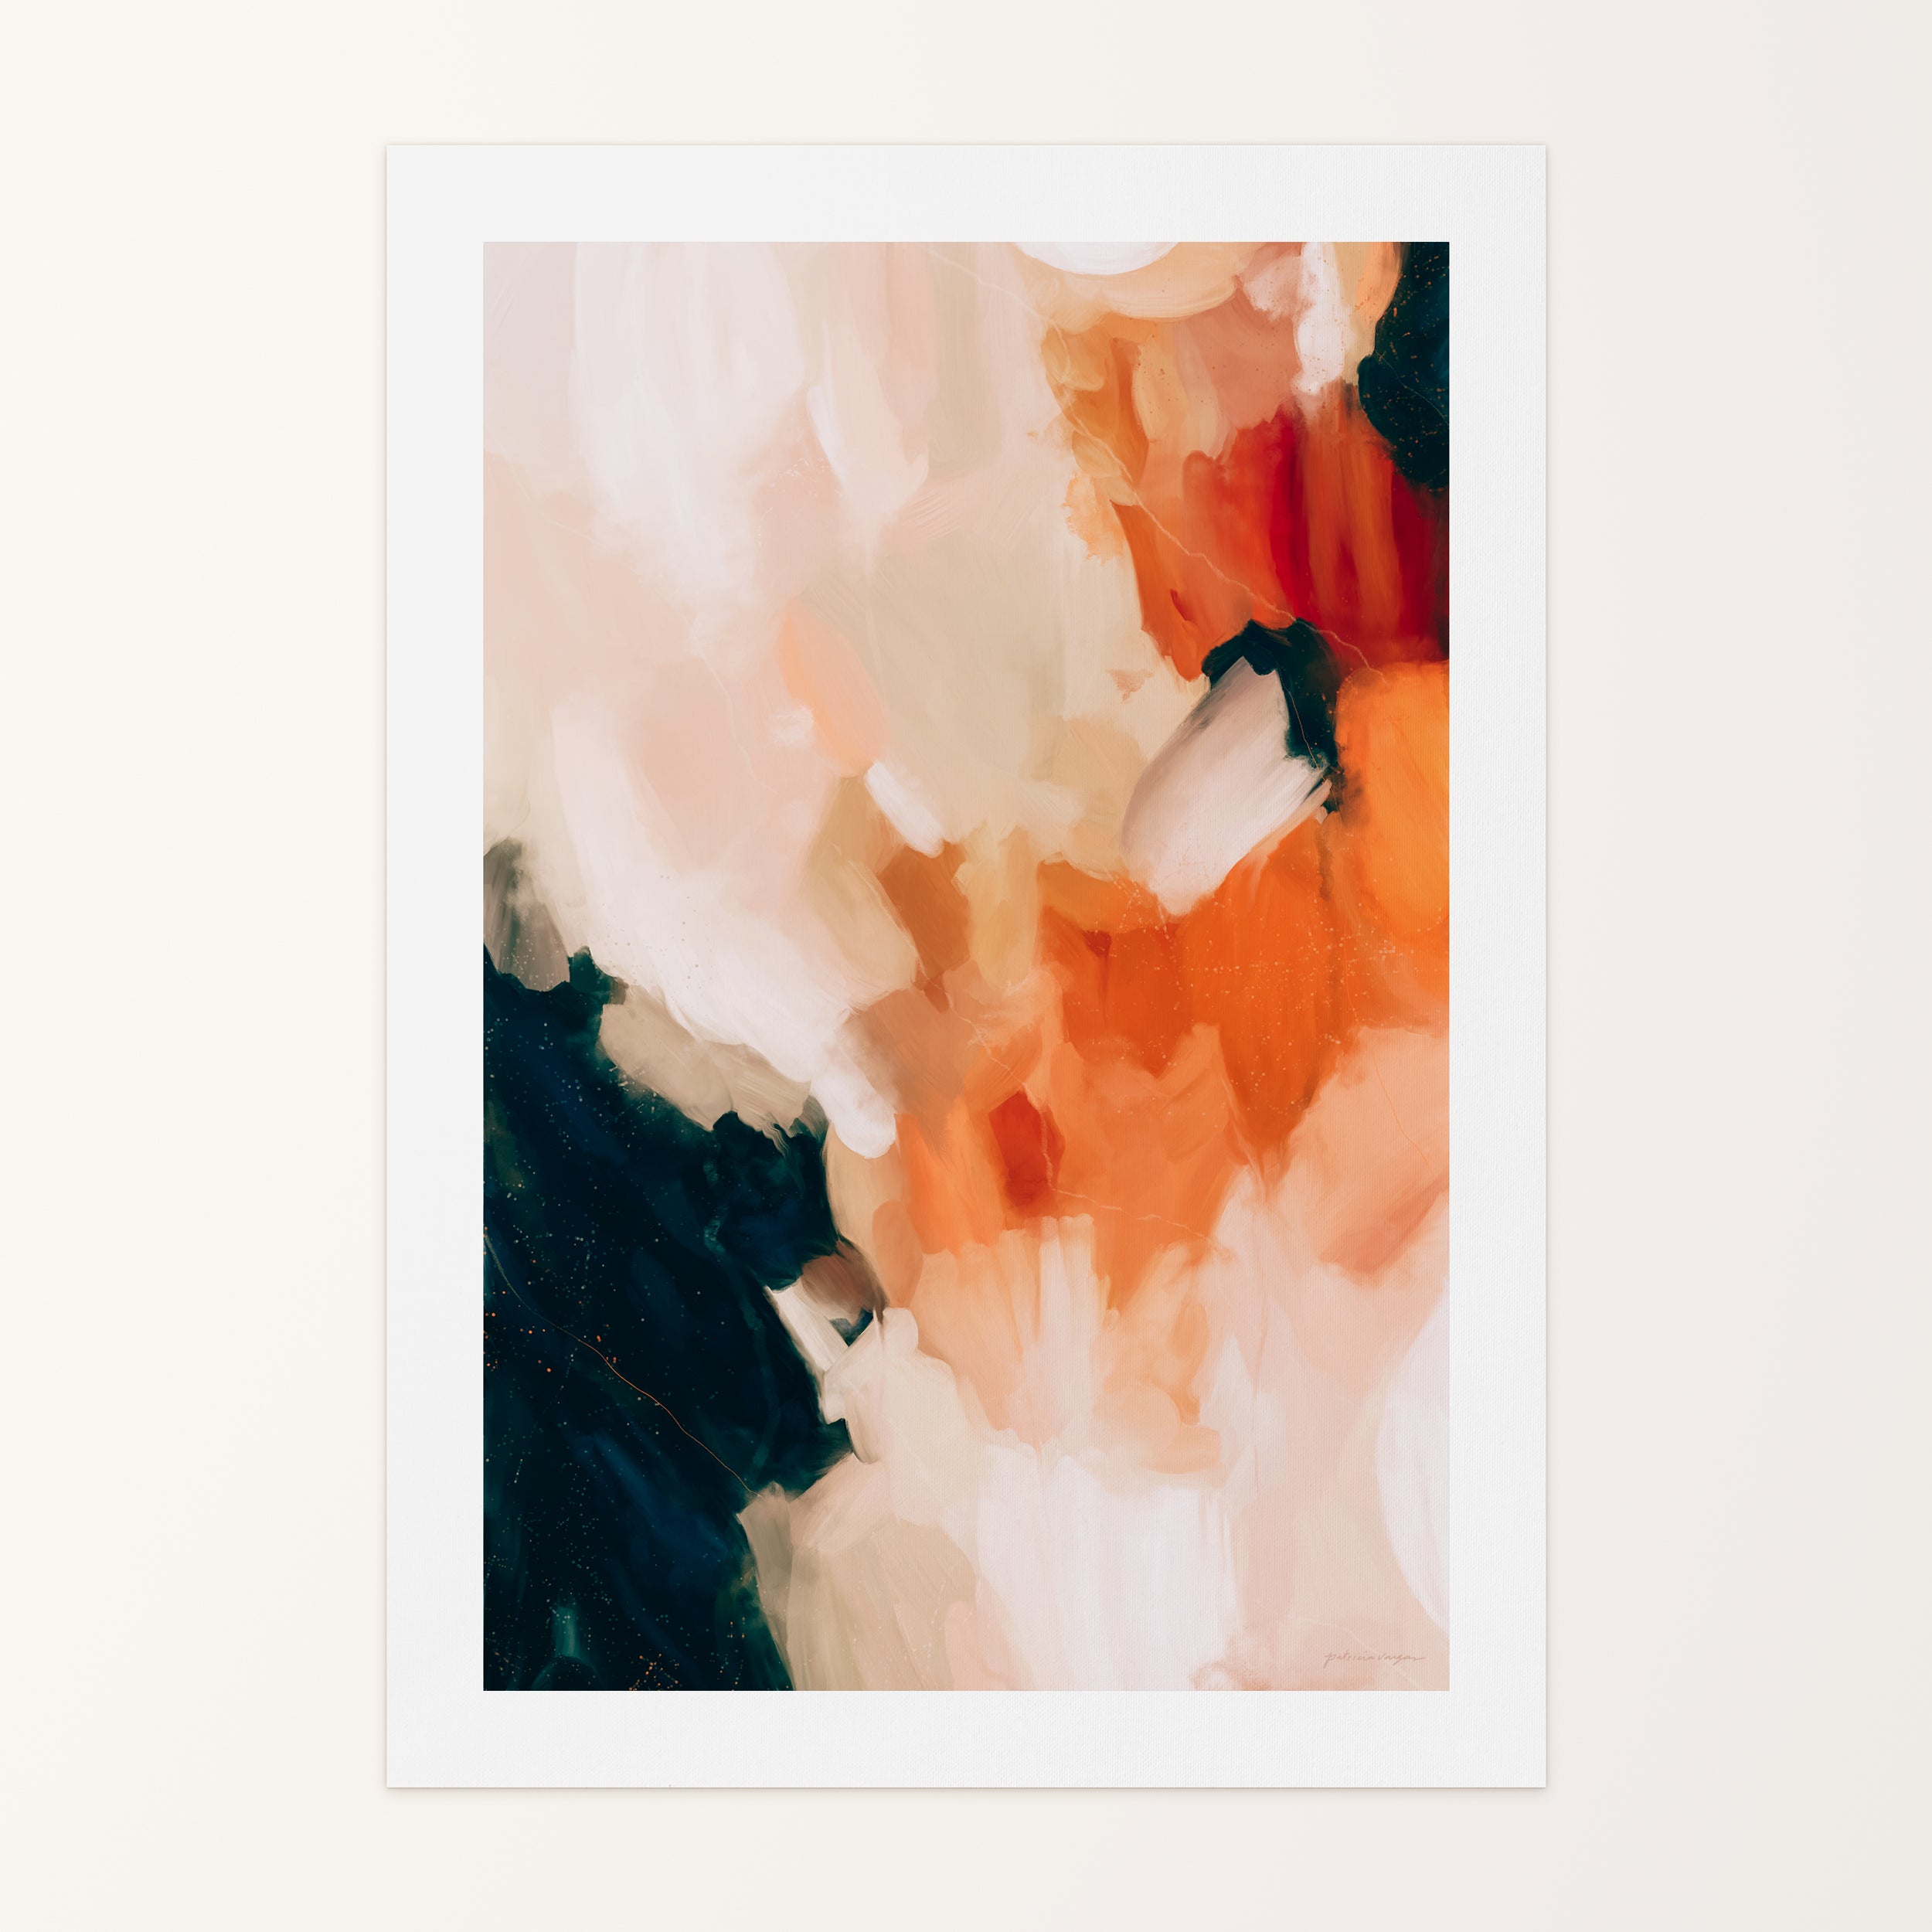 Sabrina, navy blue and orange colorful abstract canvas wall art print by Parima Studio